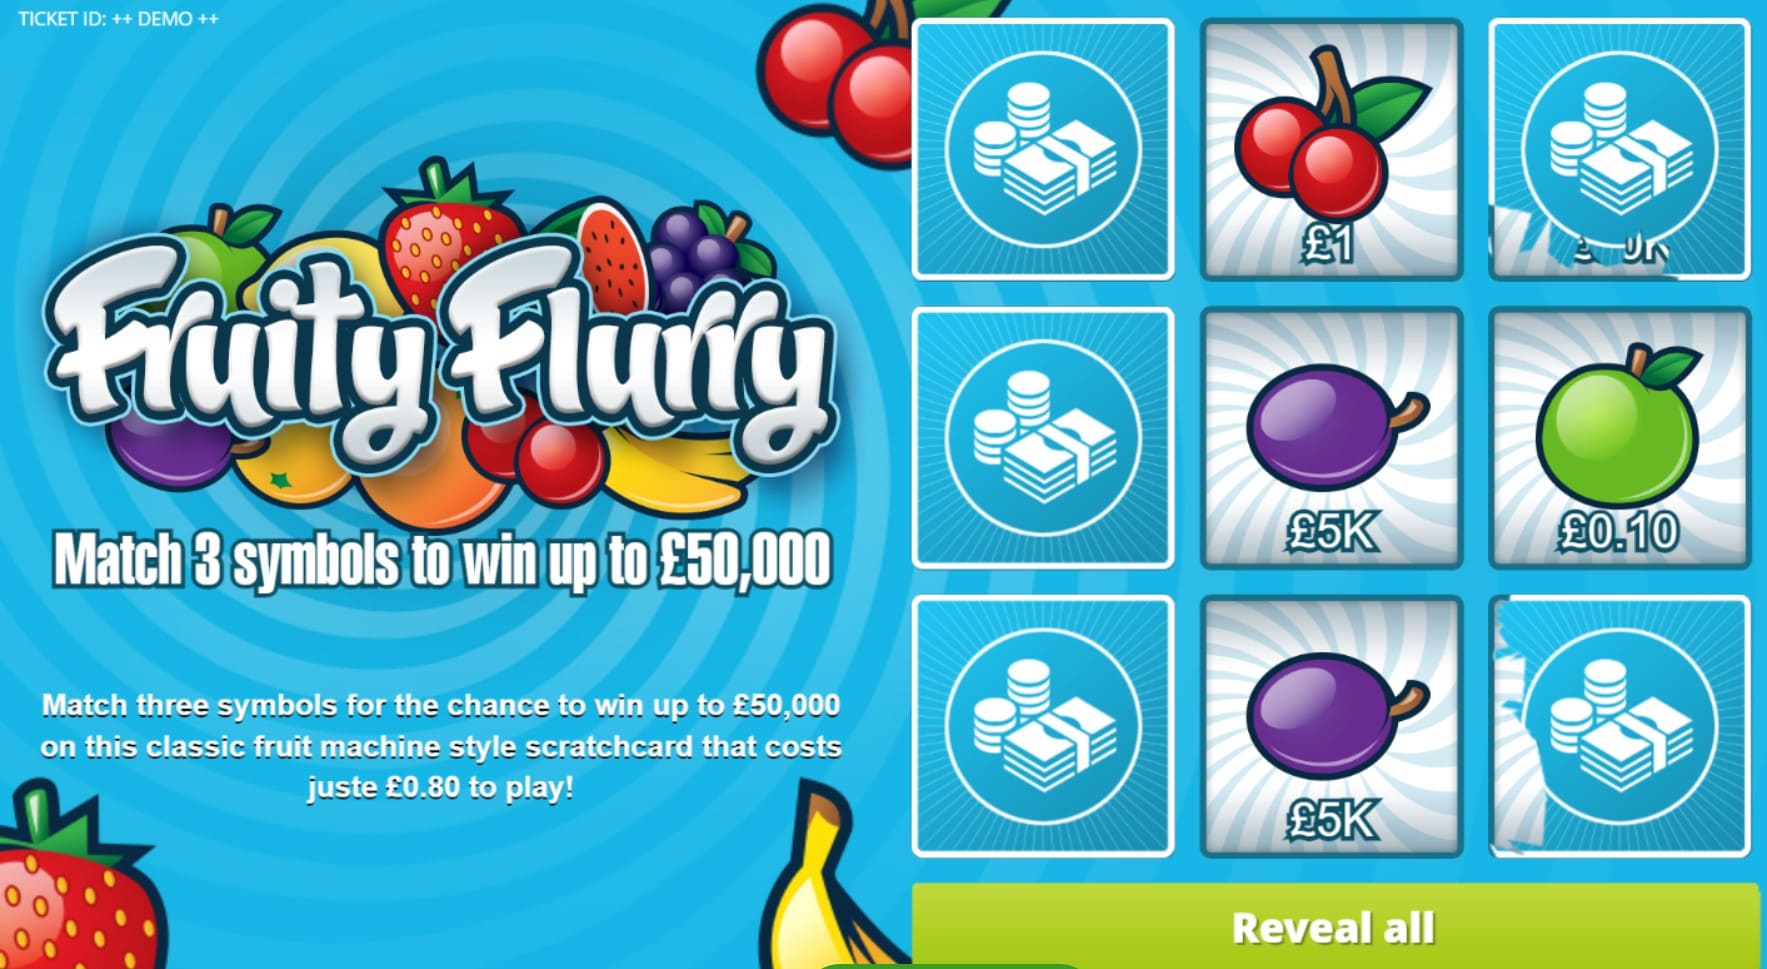 Fruity Flurry slot